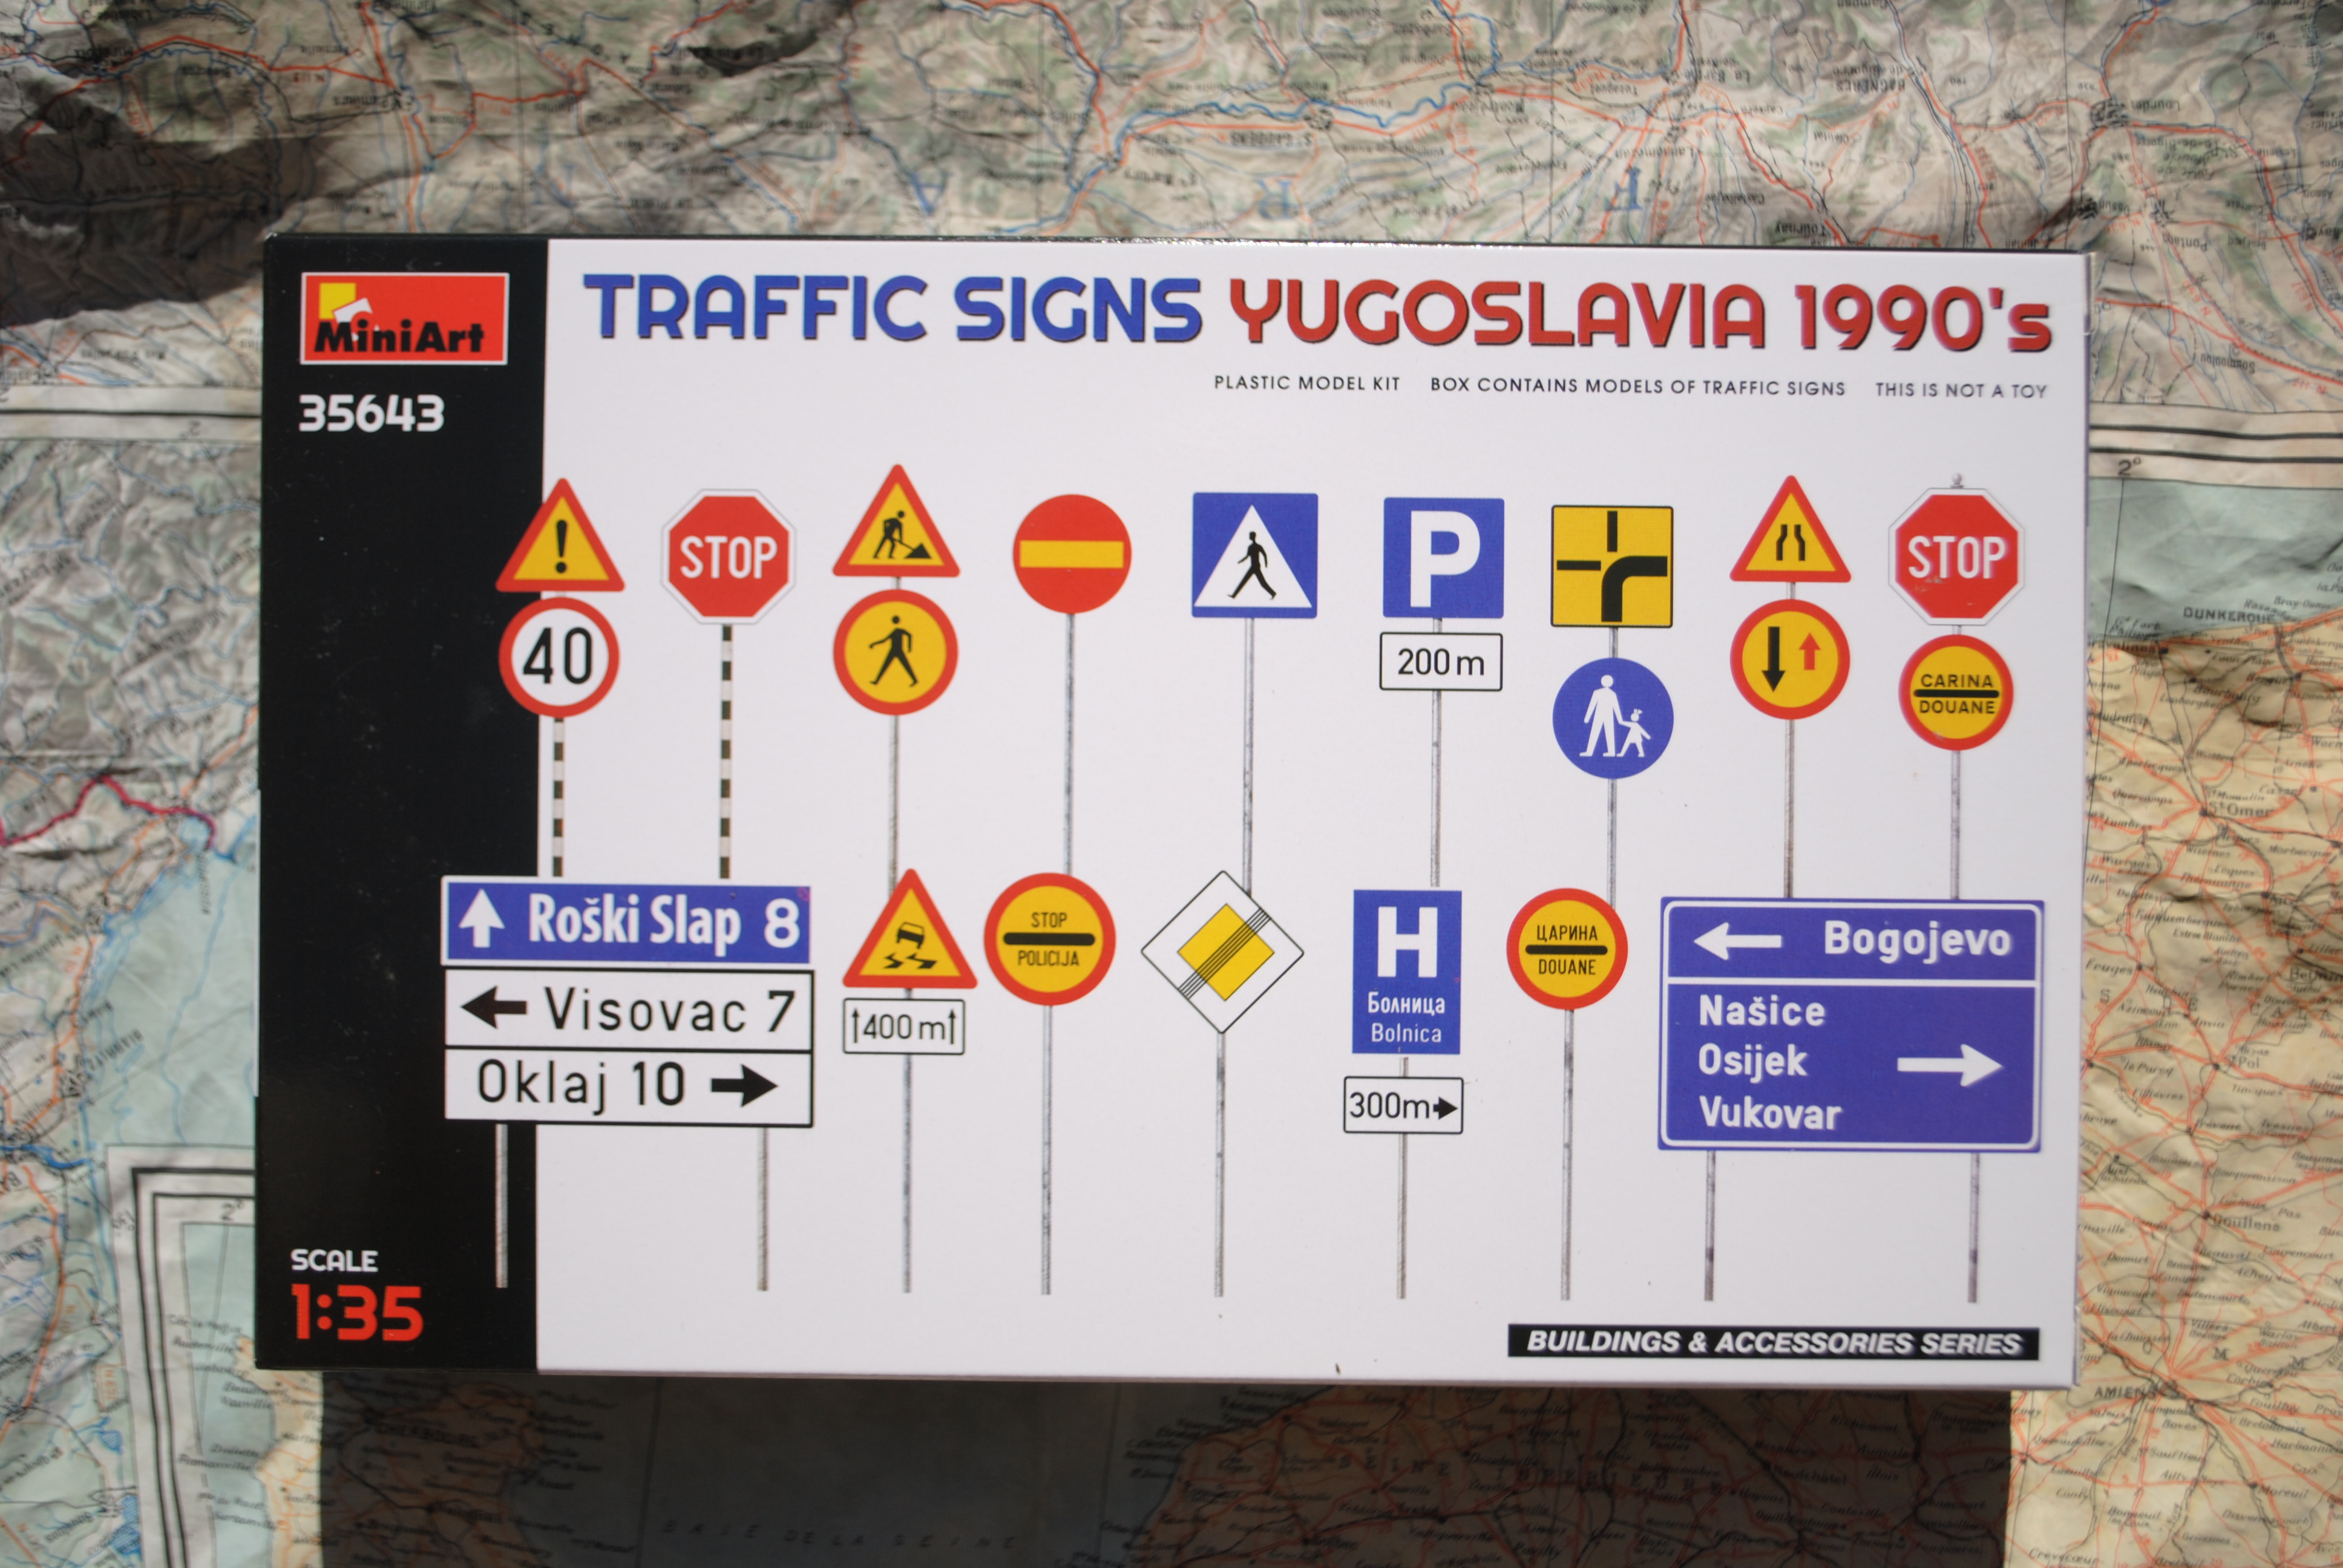 Mini Art 35643 TRAFFIC SIGNS. YUGOSLAVIA 1990’s